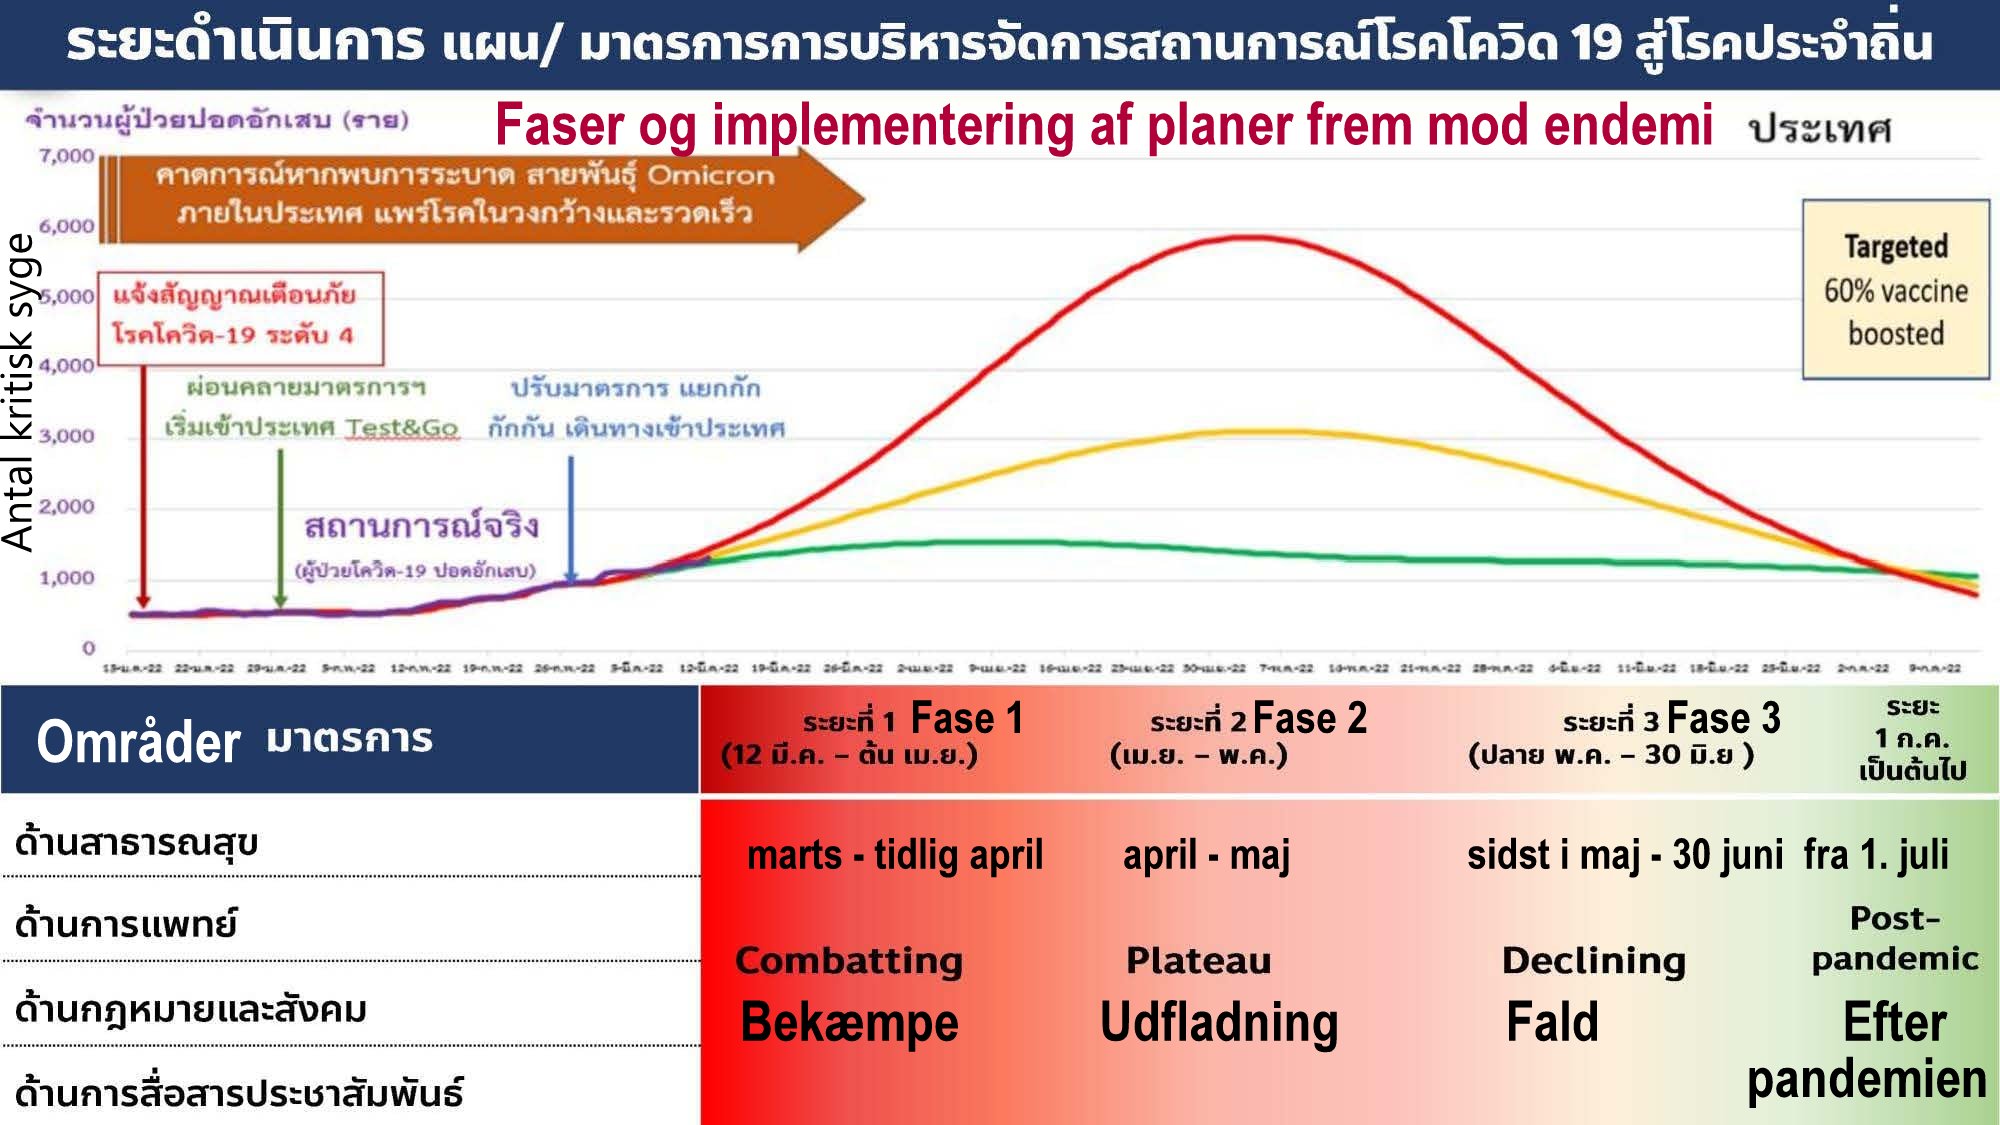 www.thaiguide.dk/images/forum/covid19/4%20faser%20aabning%20udvikling%20smitte%20dk.jpg